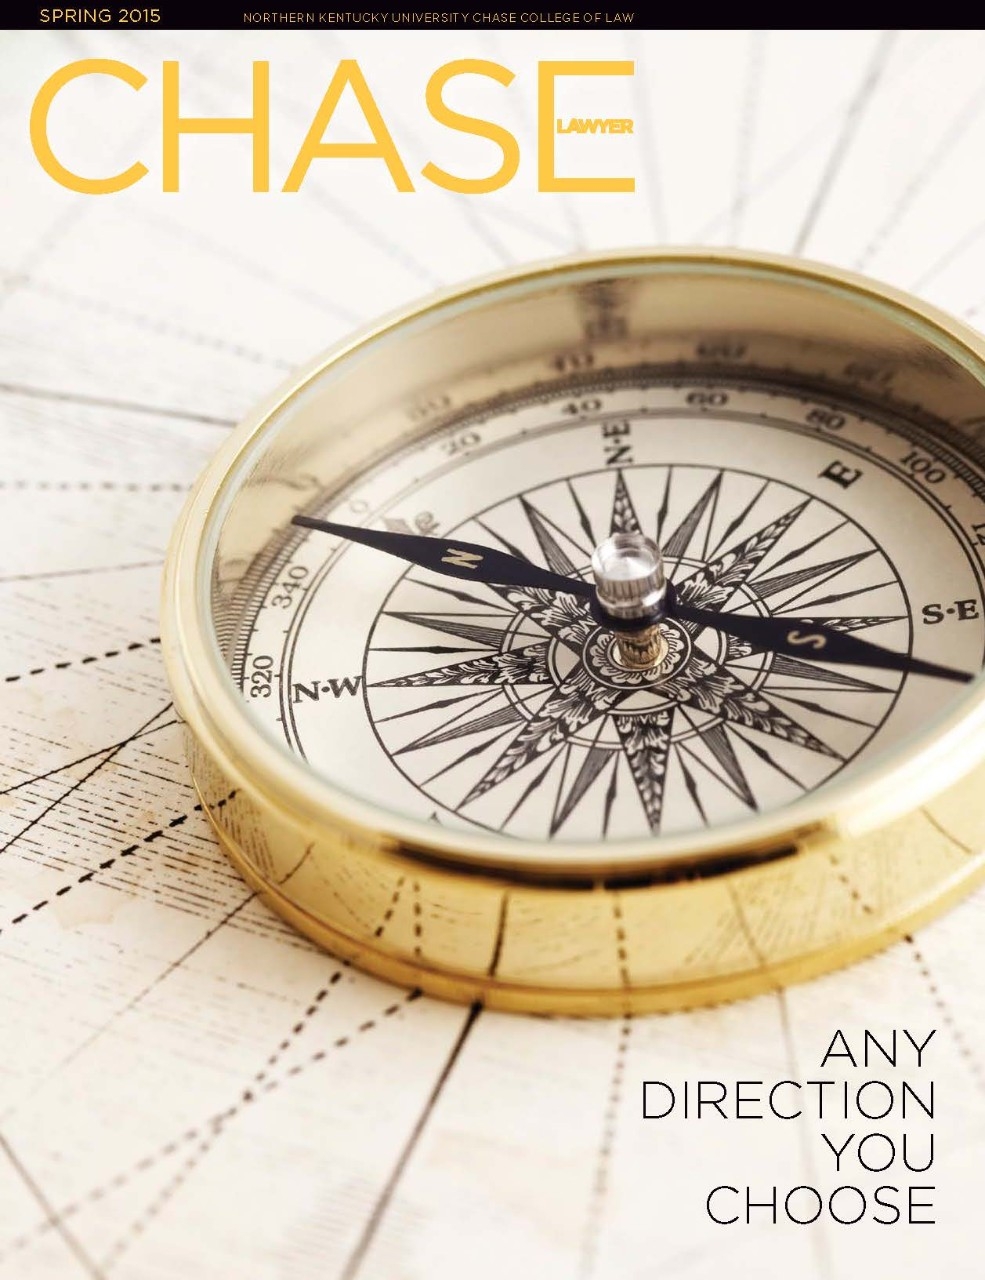 Chase Alumni Magazine Spring 2015